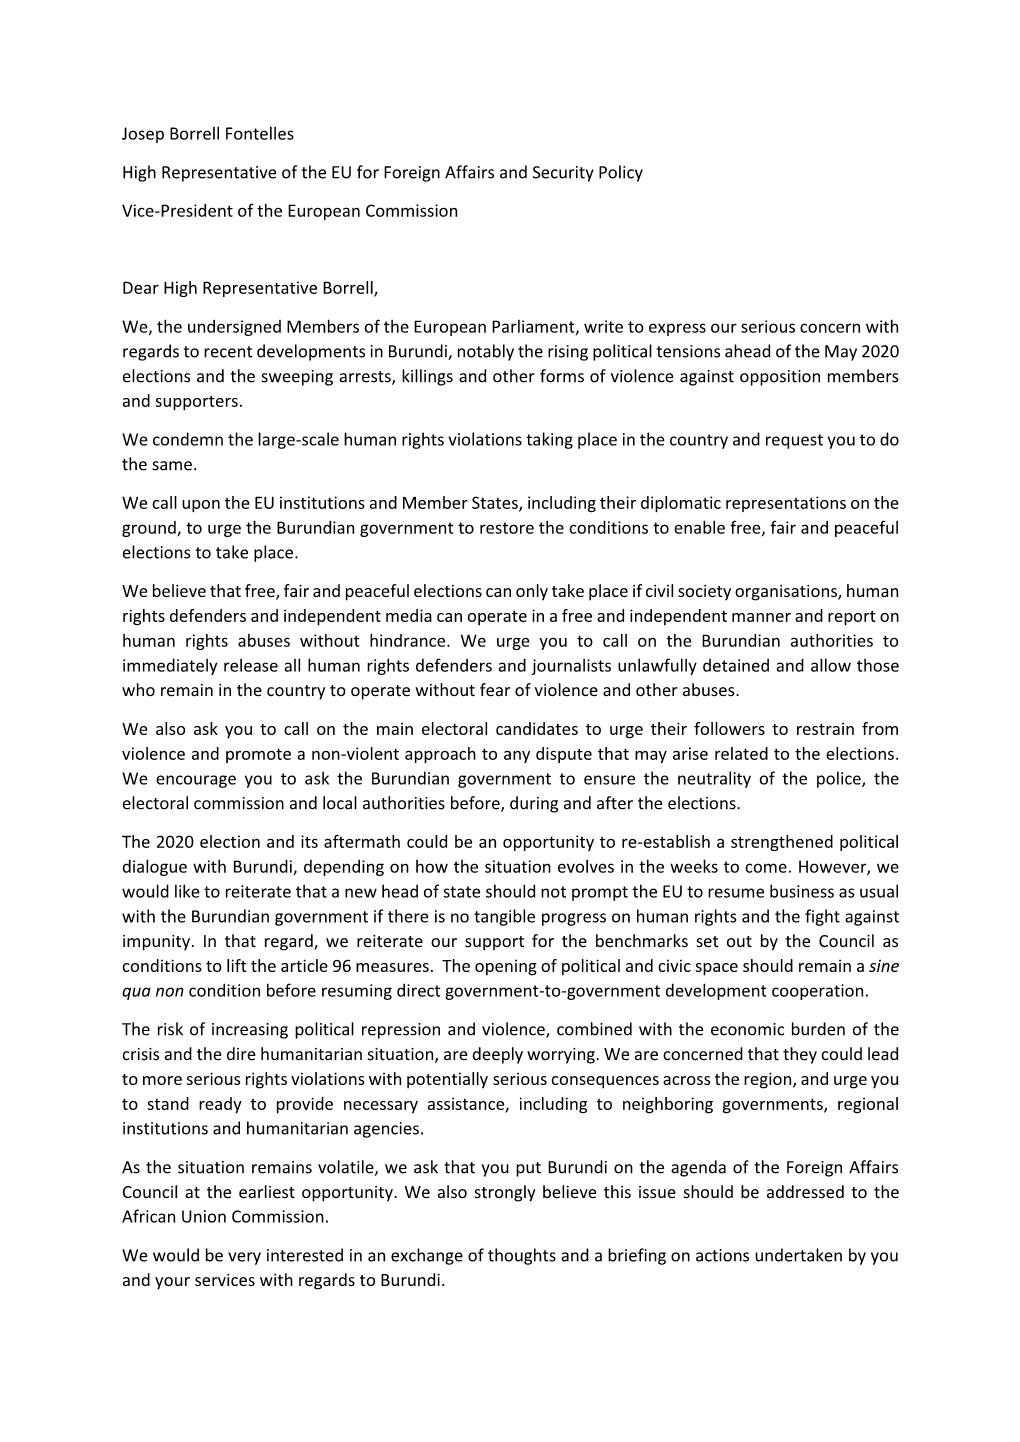 Letter to High Representative Josep Borrell on Burundi